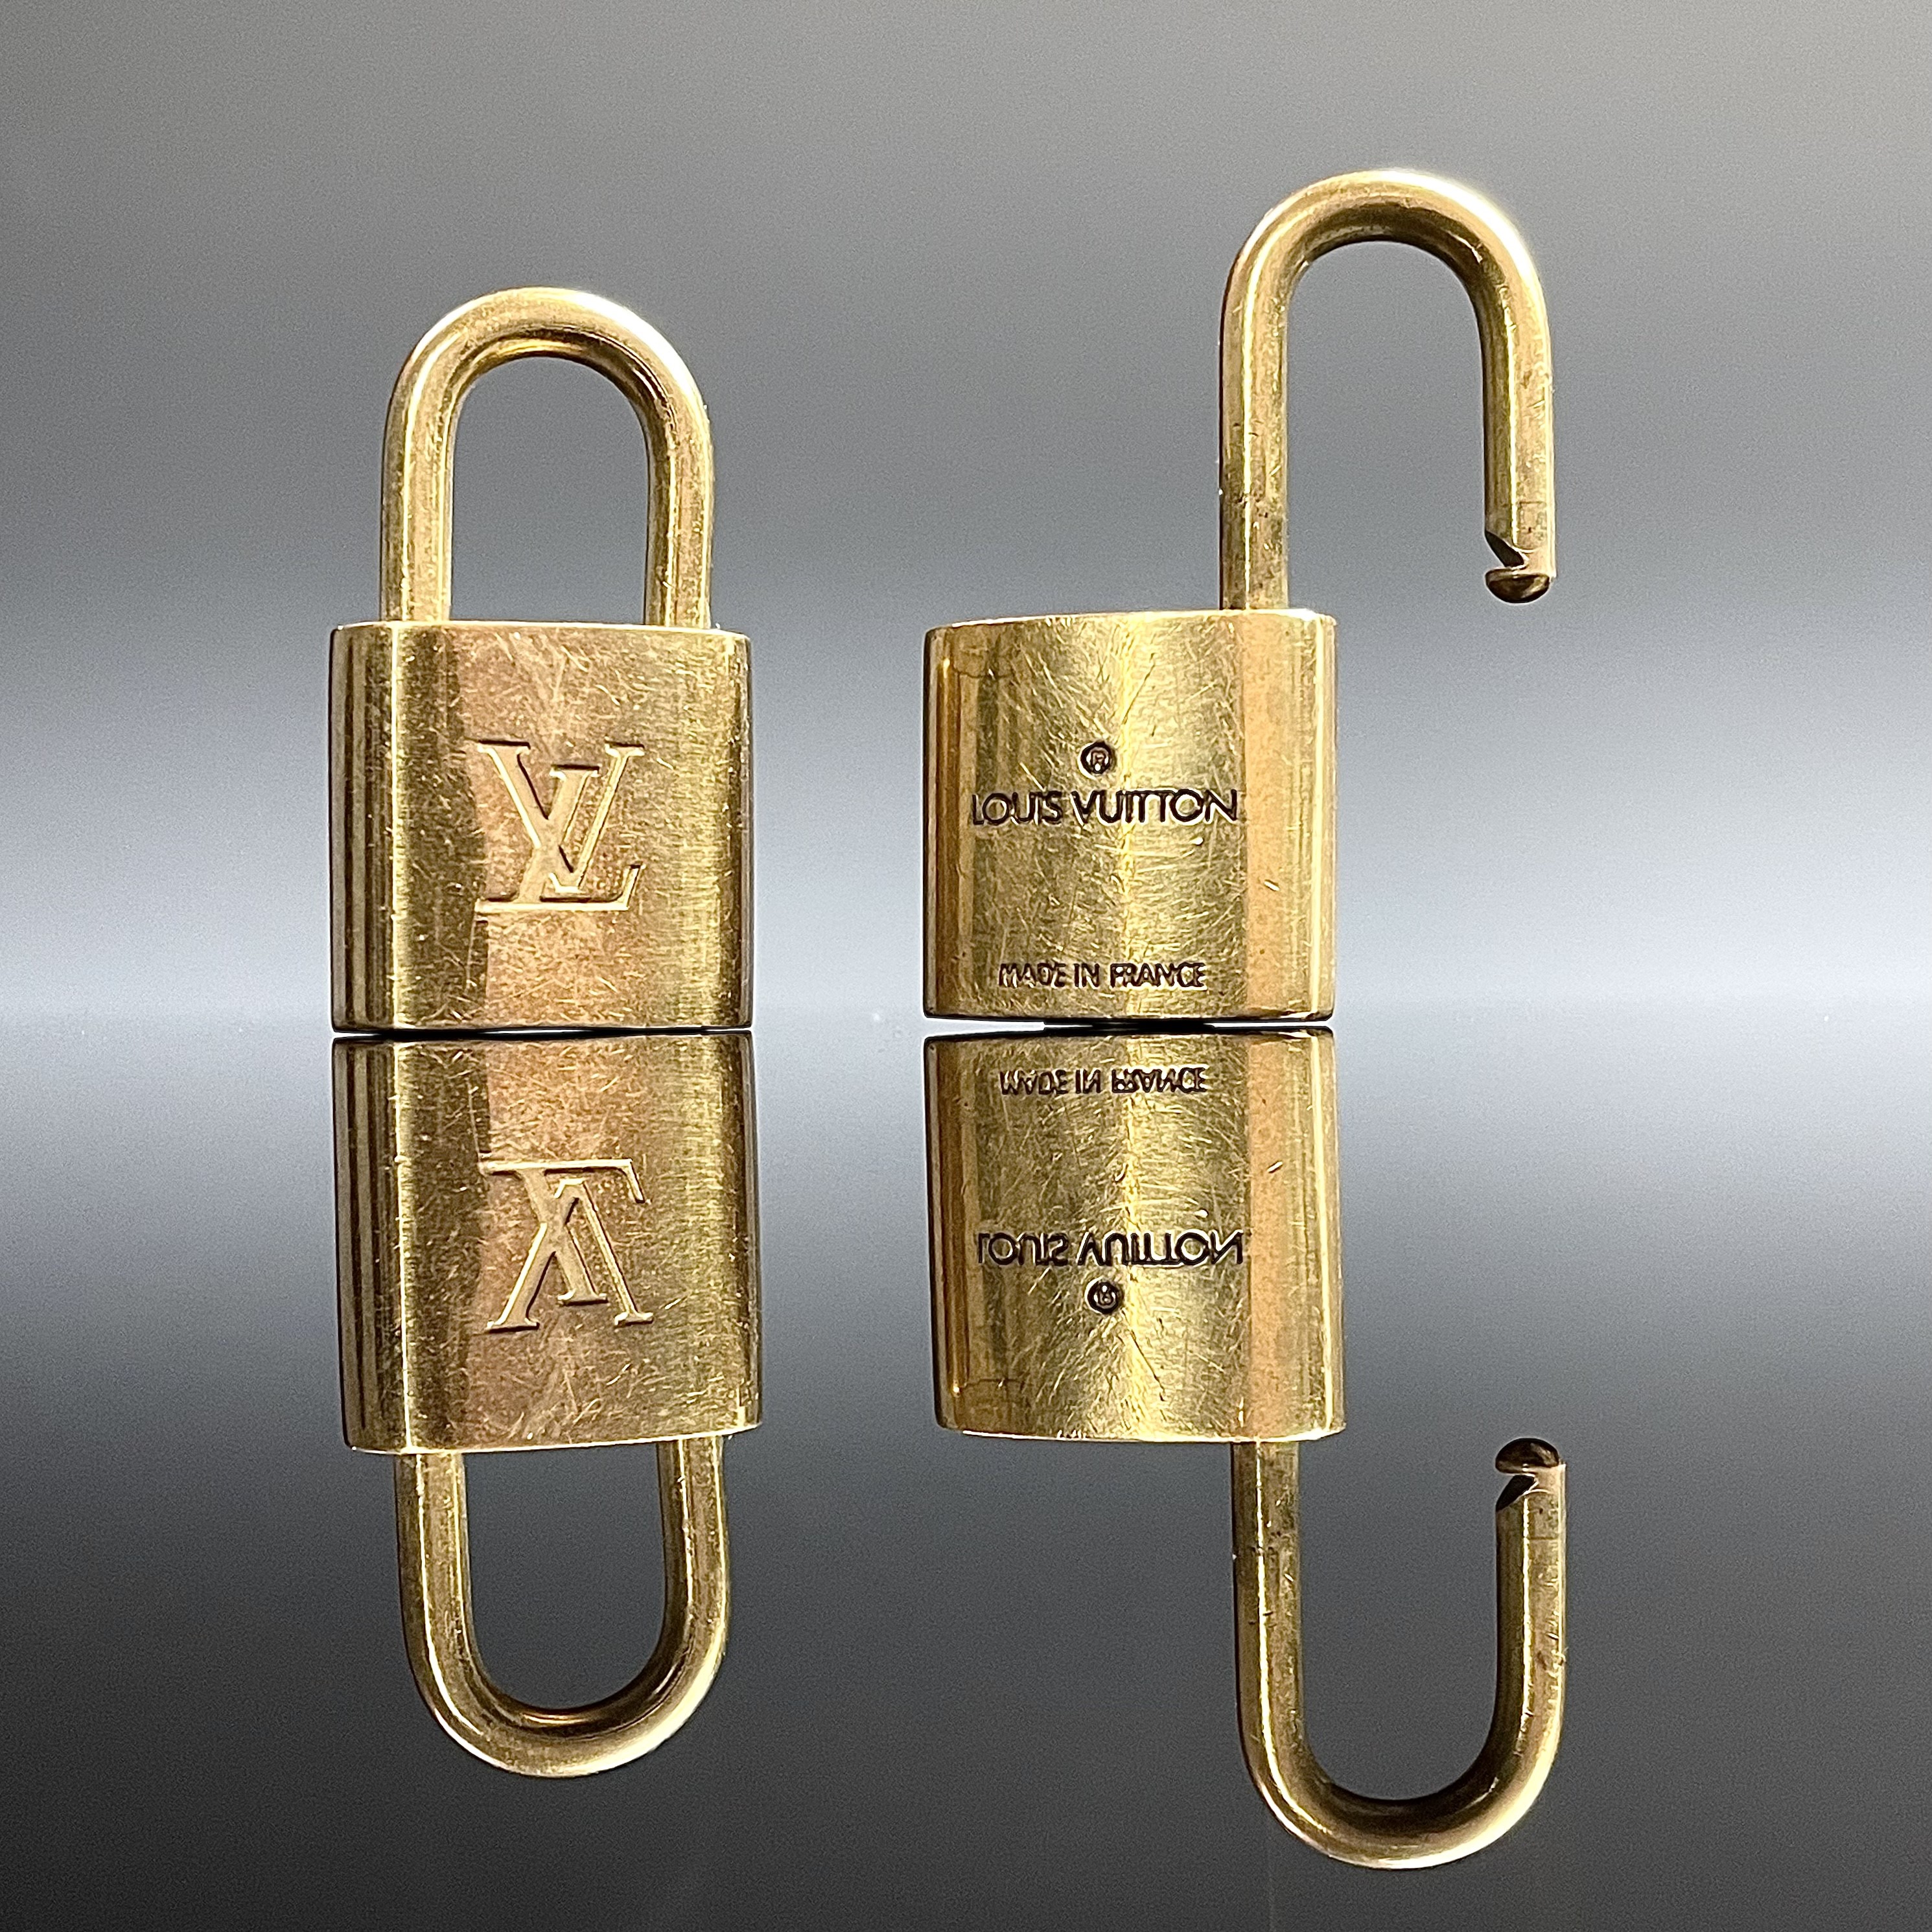 Sold at Auction: Louis Vuitton, LOUIS VUITTON PadLock Lock Key